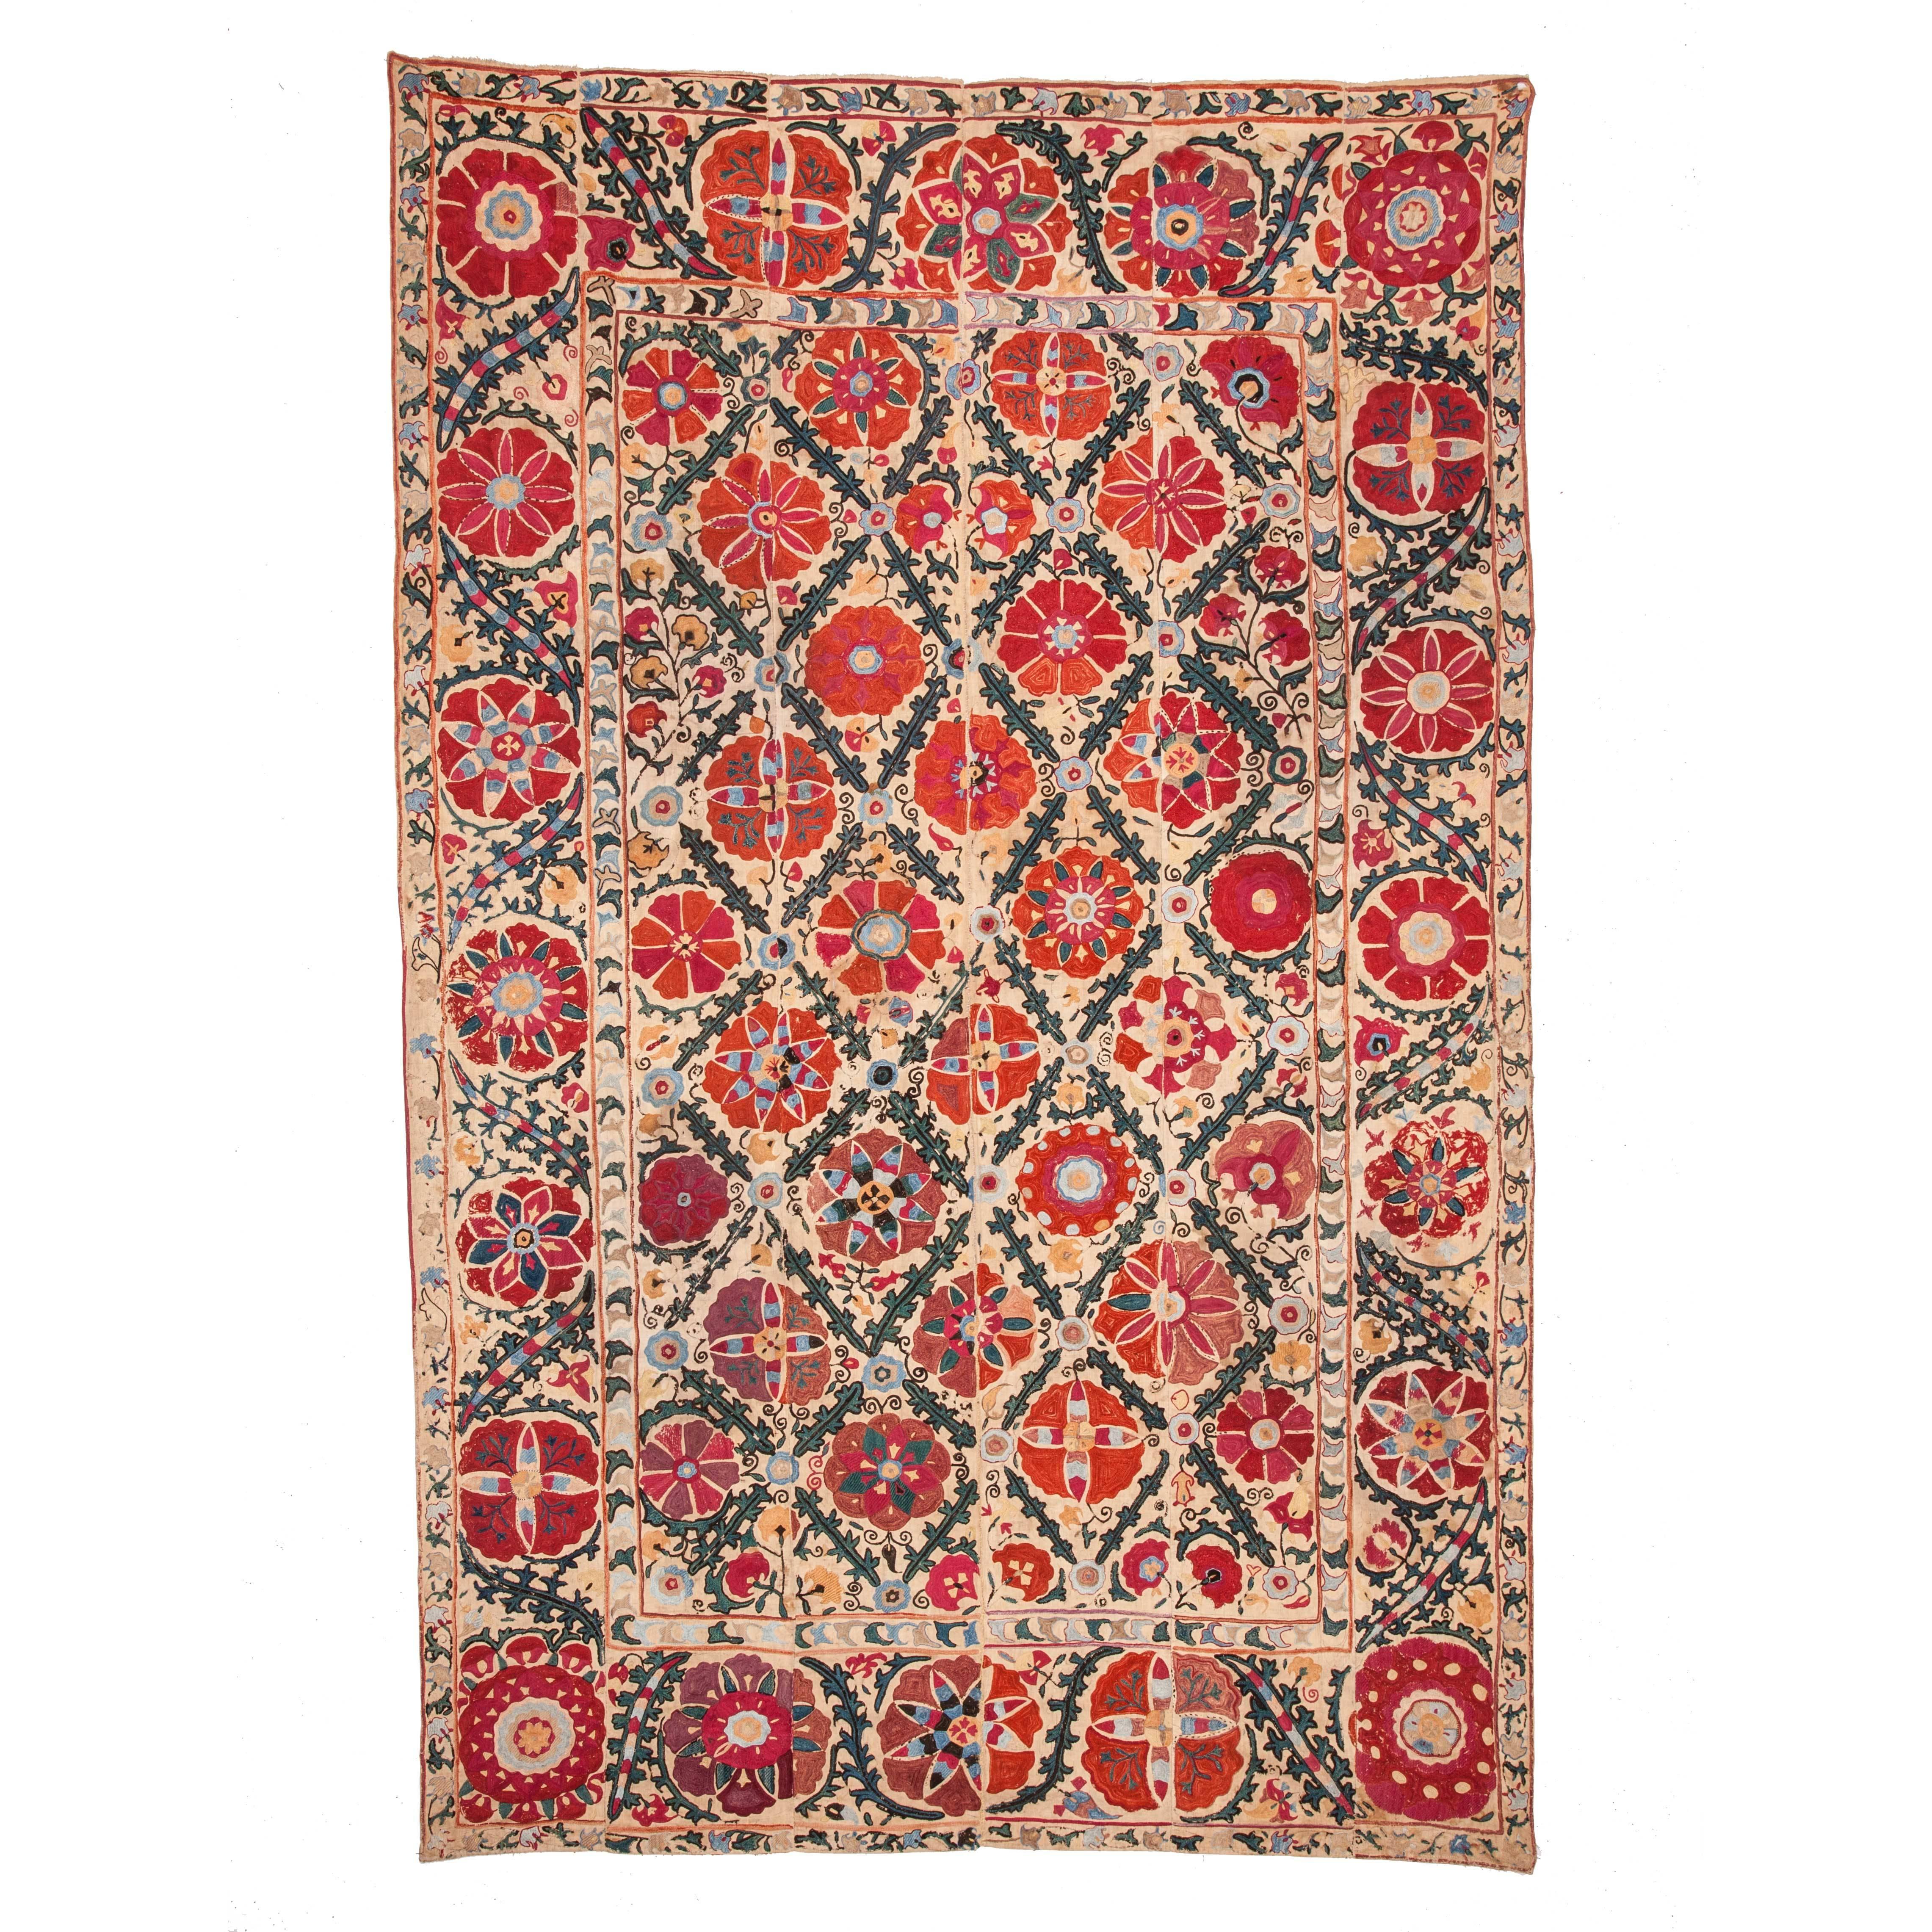 19th Century Uzbek Suzani from Bukhara Silk on Cotton